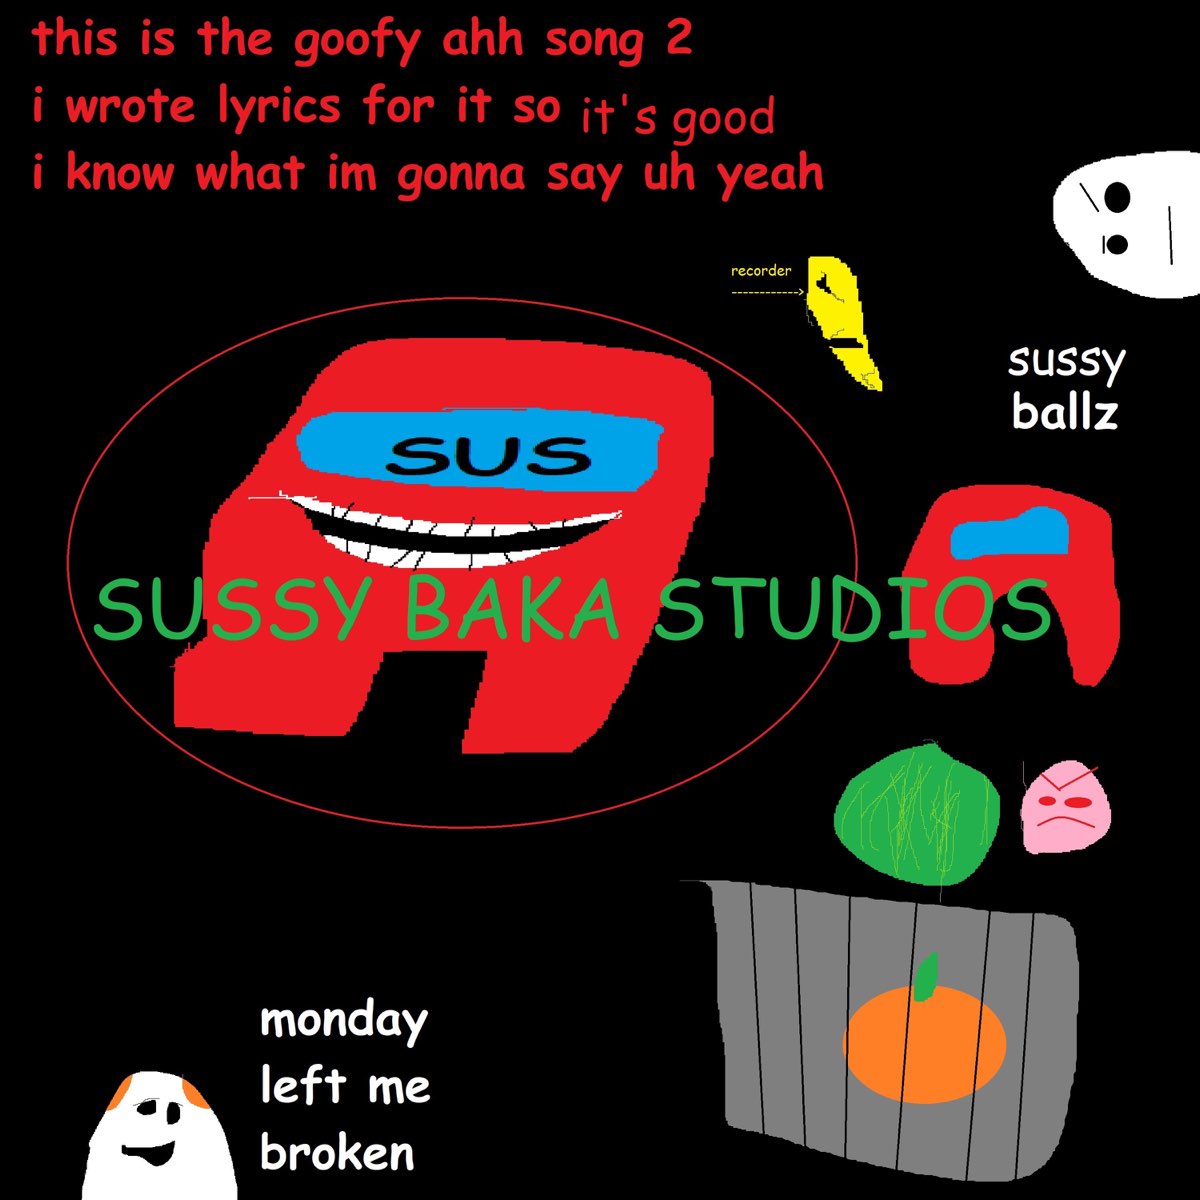 The Goofy Ahh Song 2 - Single - Album by Sussy Baka Studios